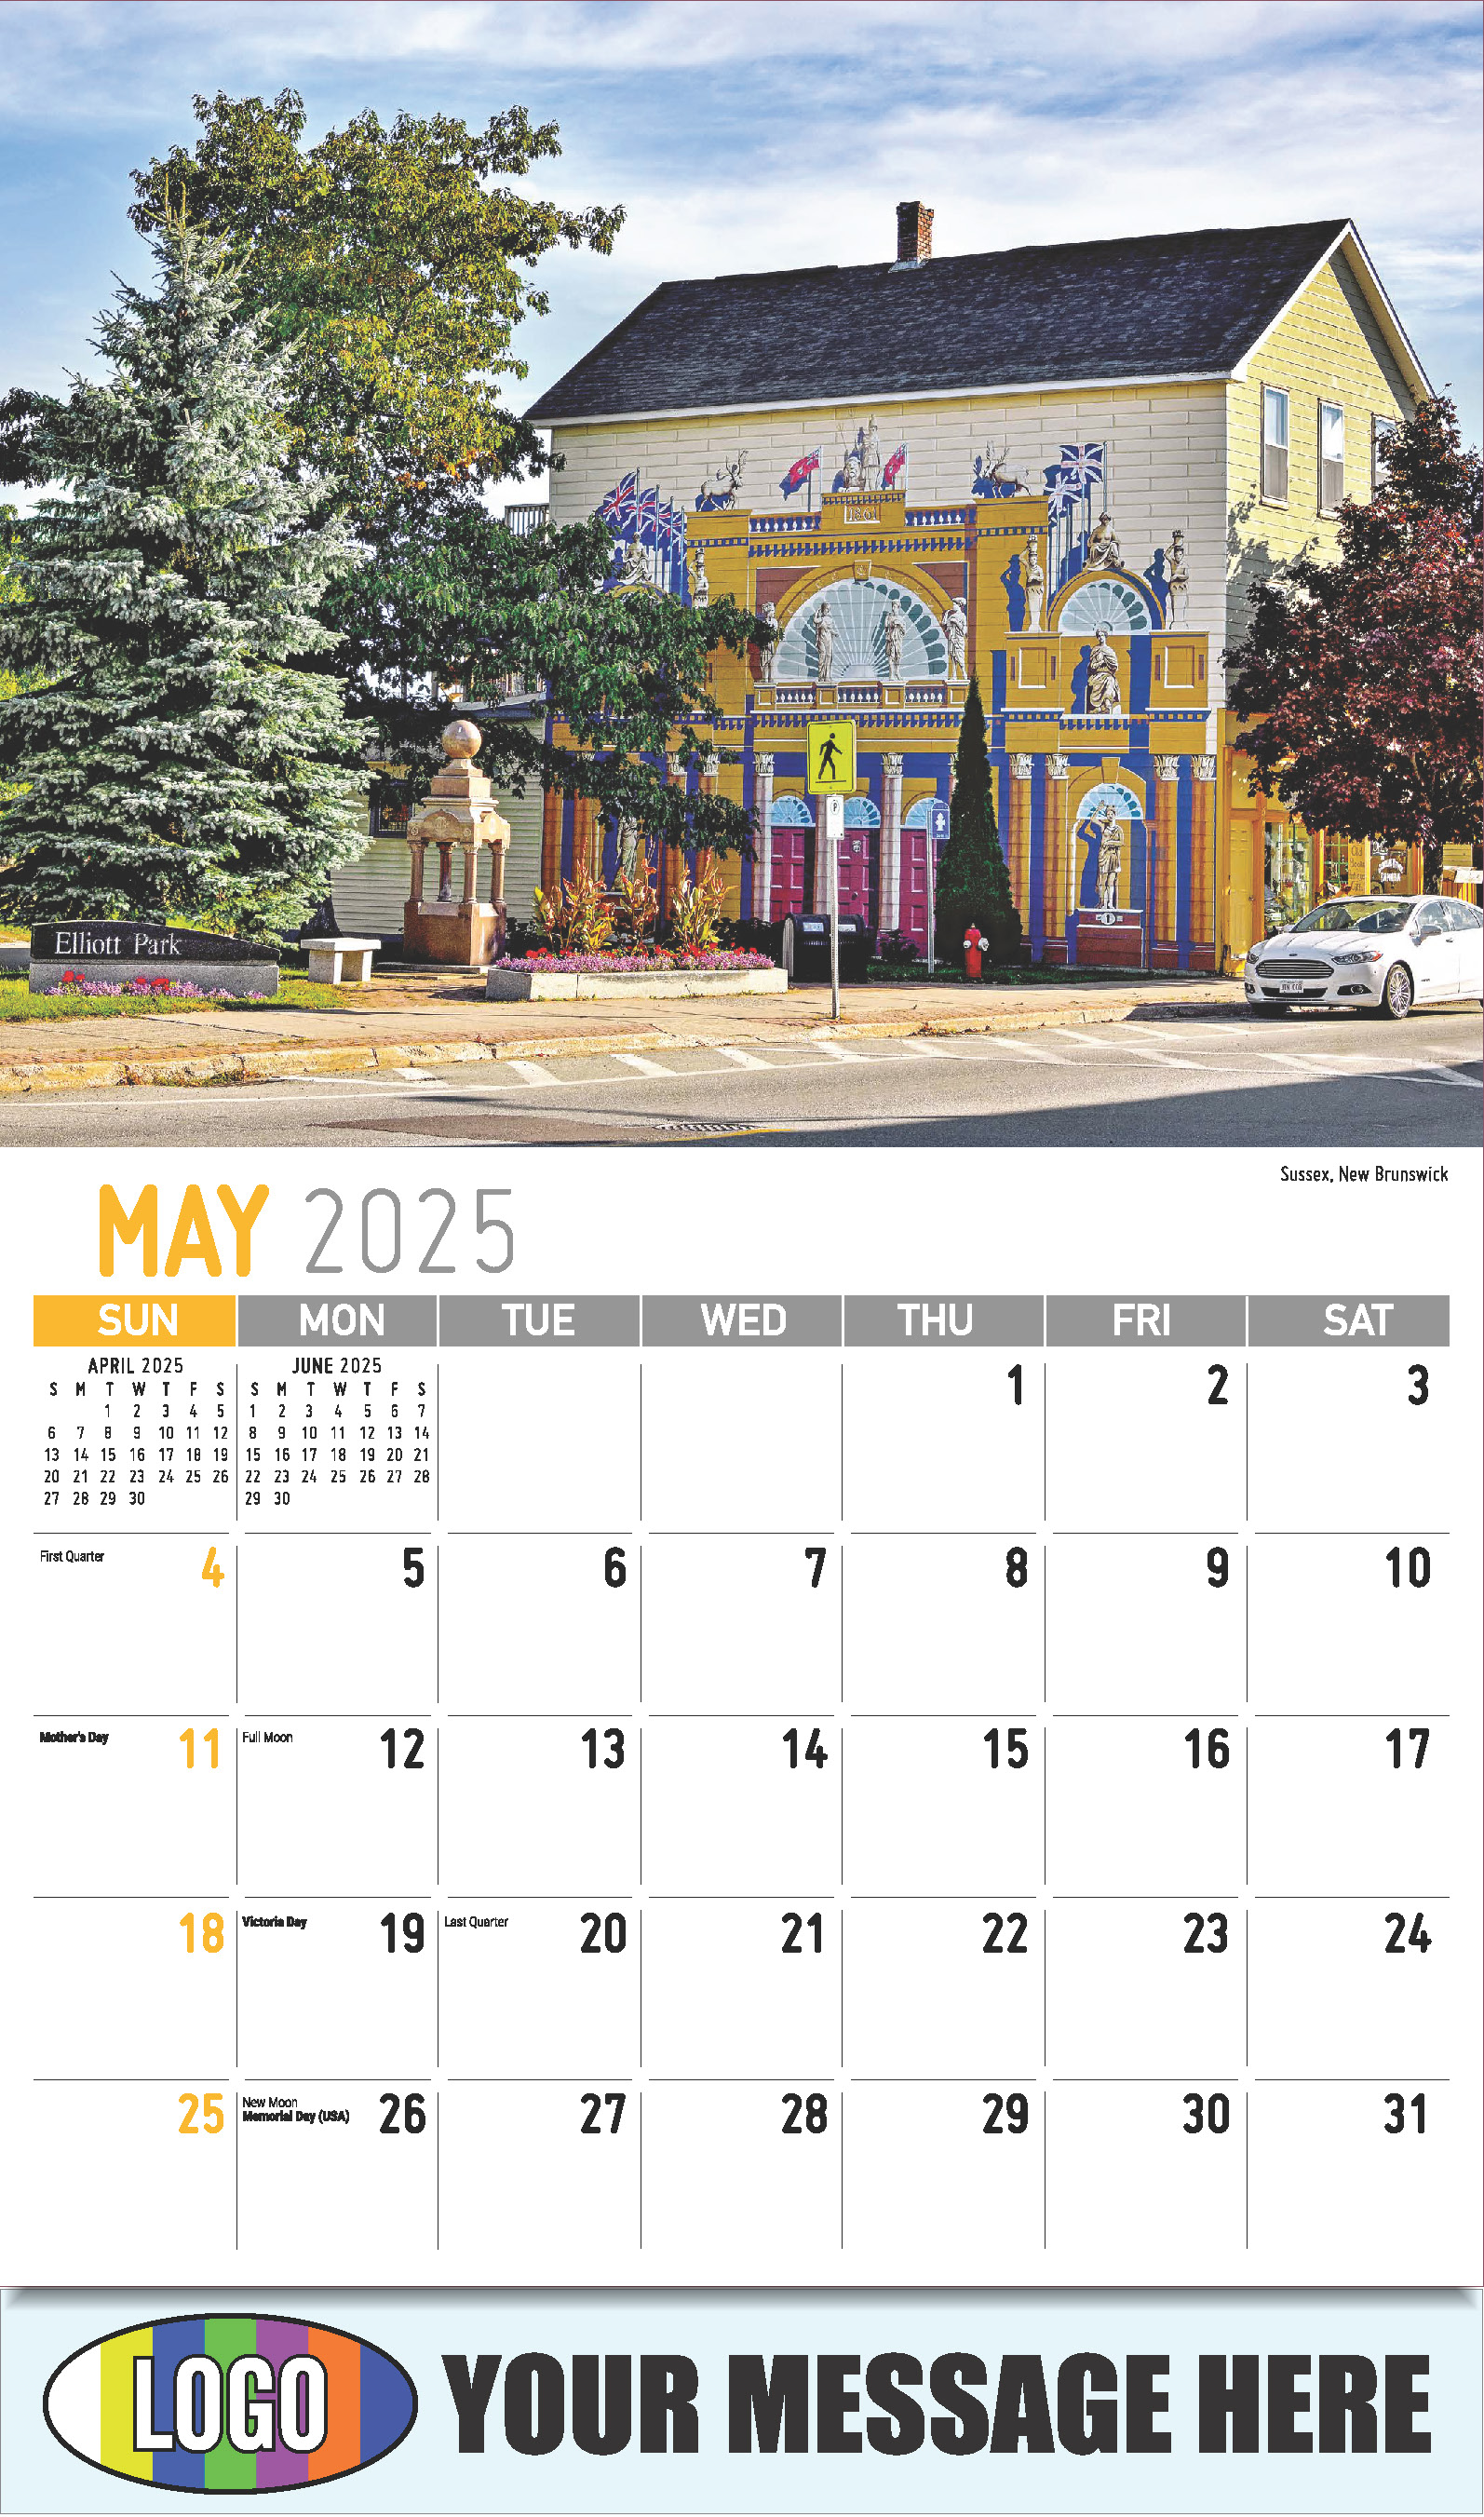 Atlantic Canada Scenic 2025 Business Promotion Calendar - May